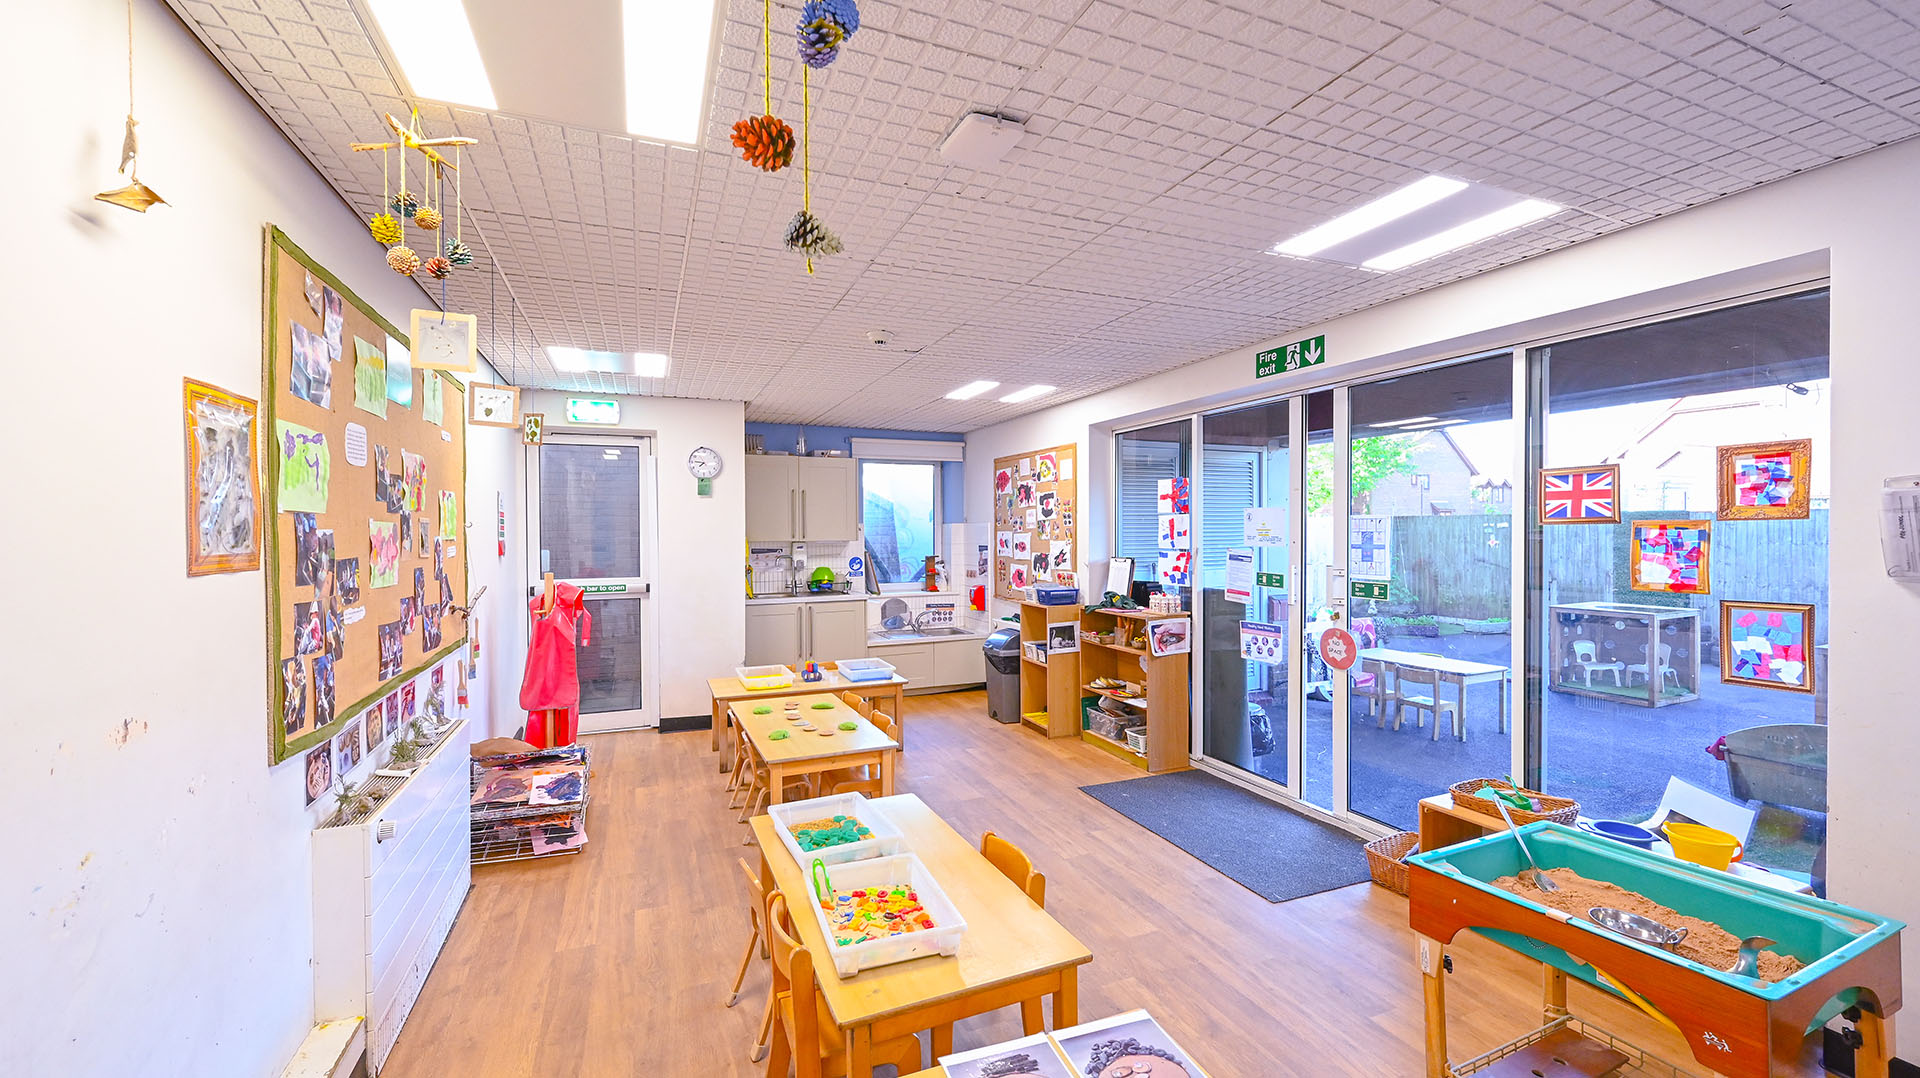 Talbot Woods Day Nursery and Preschool - Preschool